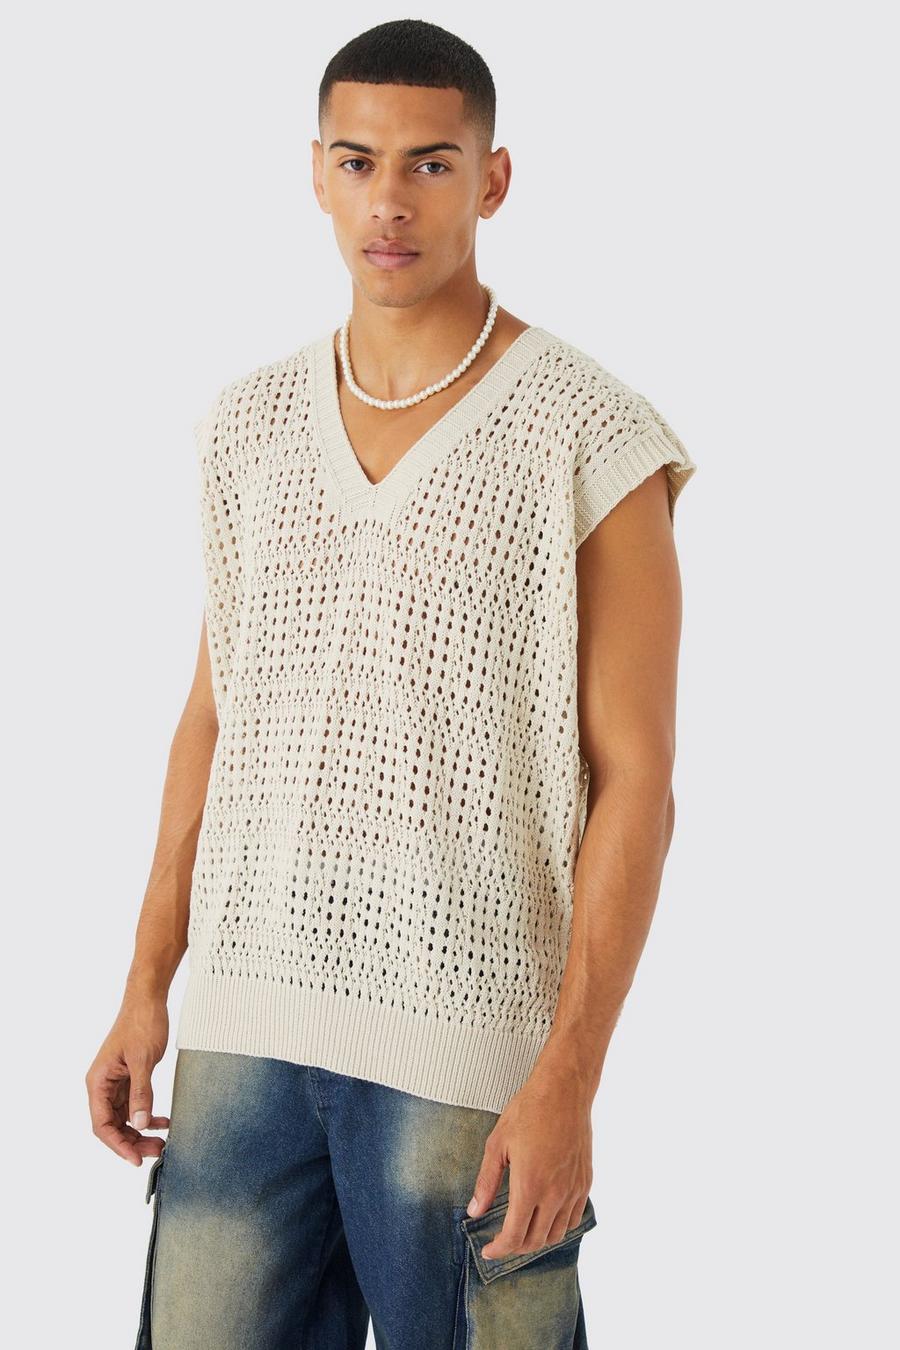 Ecru white Oversized Crochet Sweater Vest